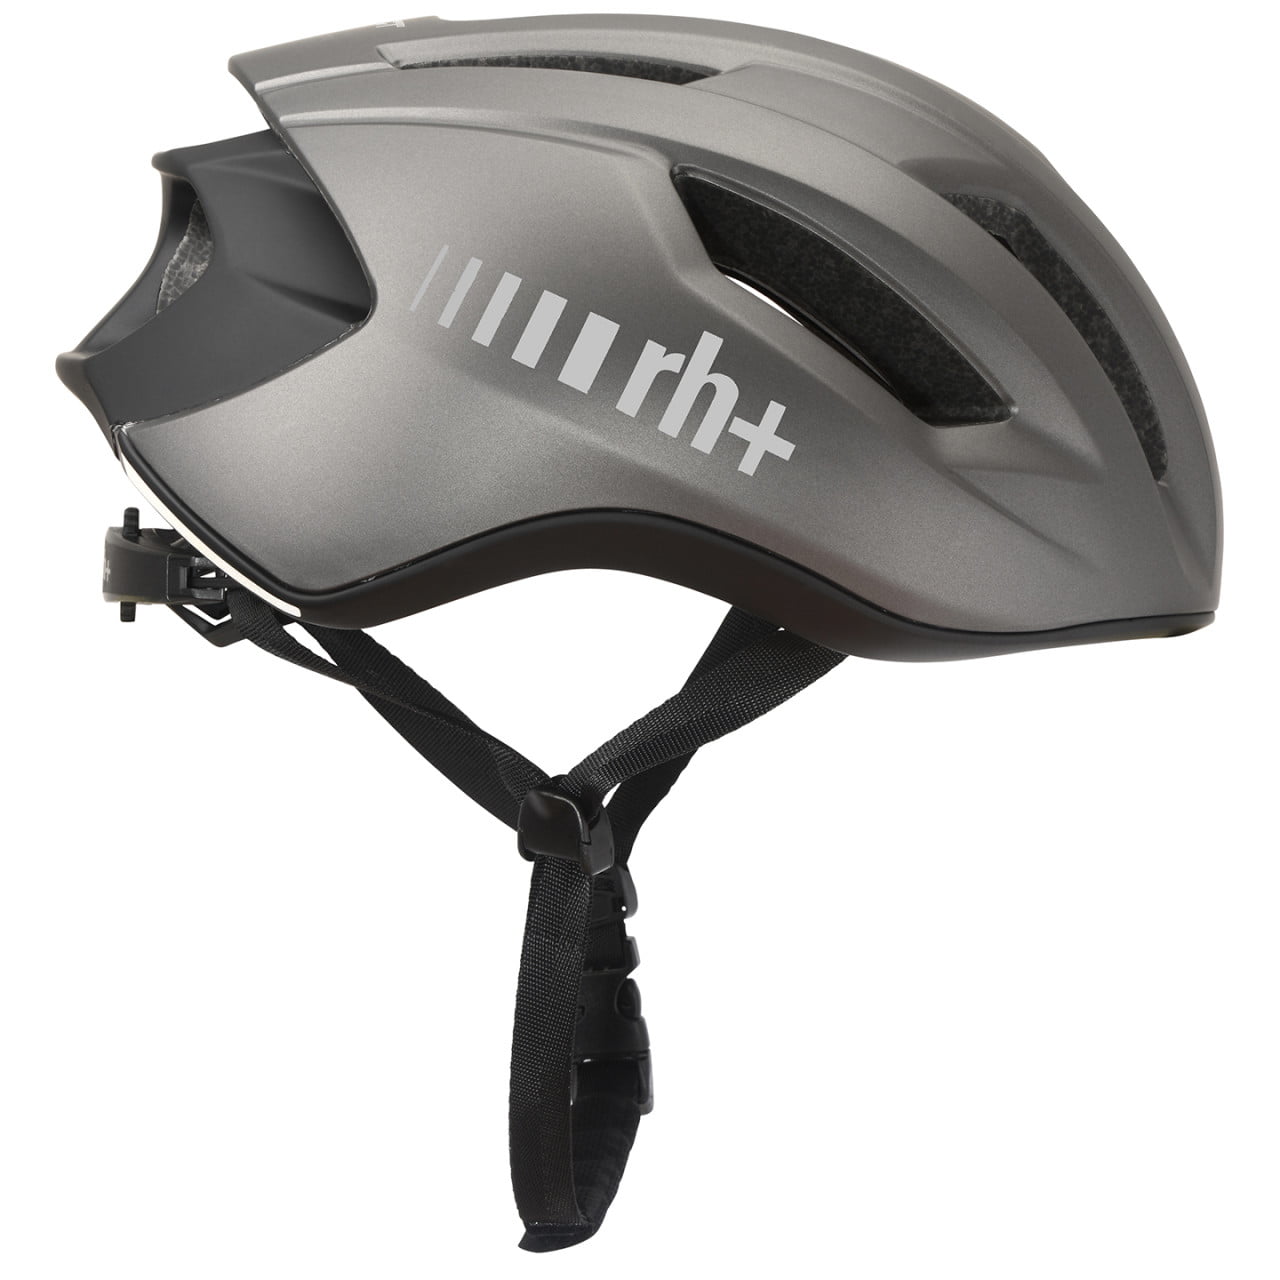 rh+ Compact Road Bike Helmet